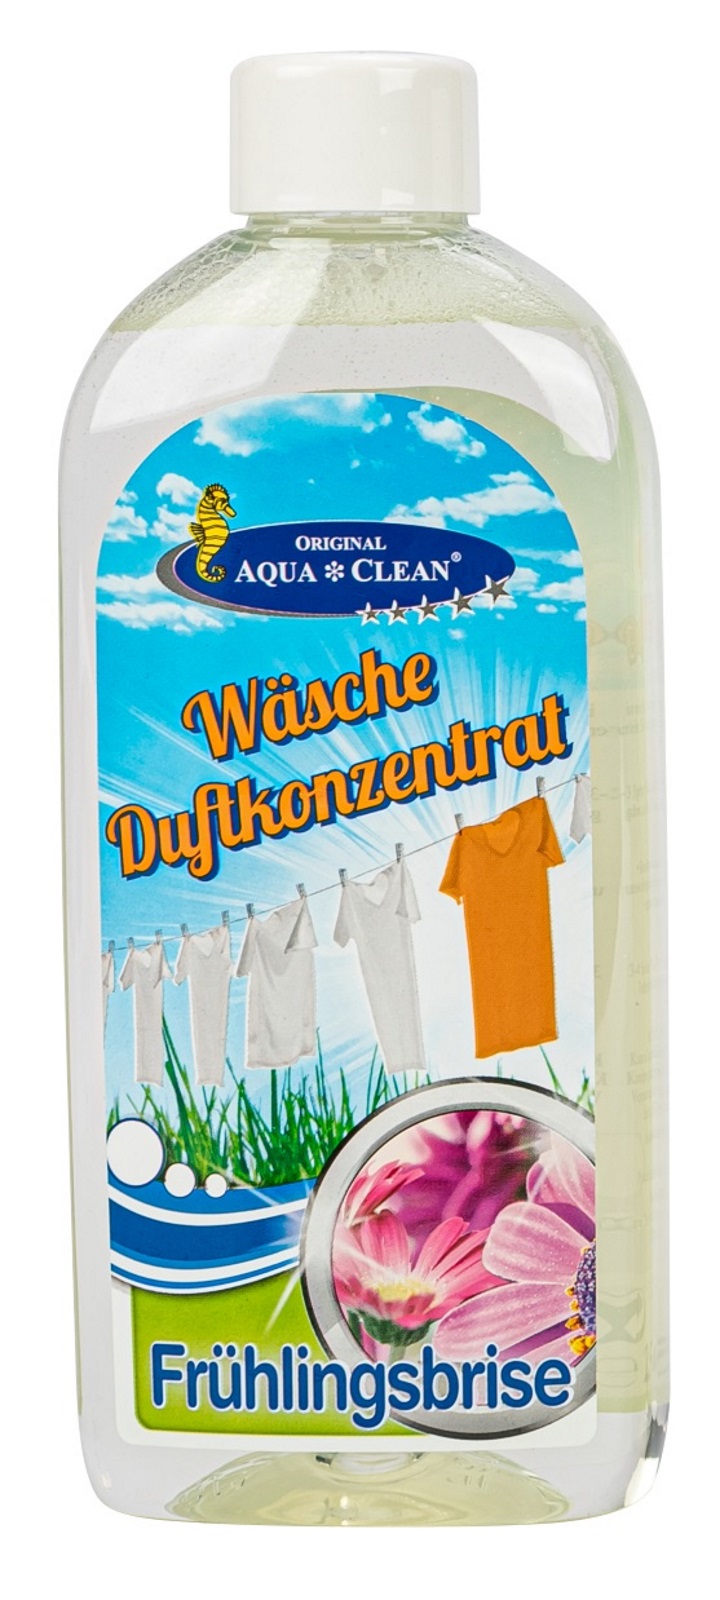 AQUA CLEAN PUR Wäsche Duftkonzentrat Frühlingsbrise 250ml